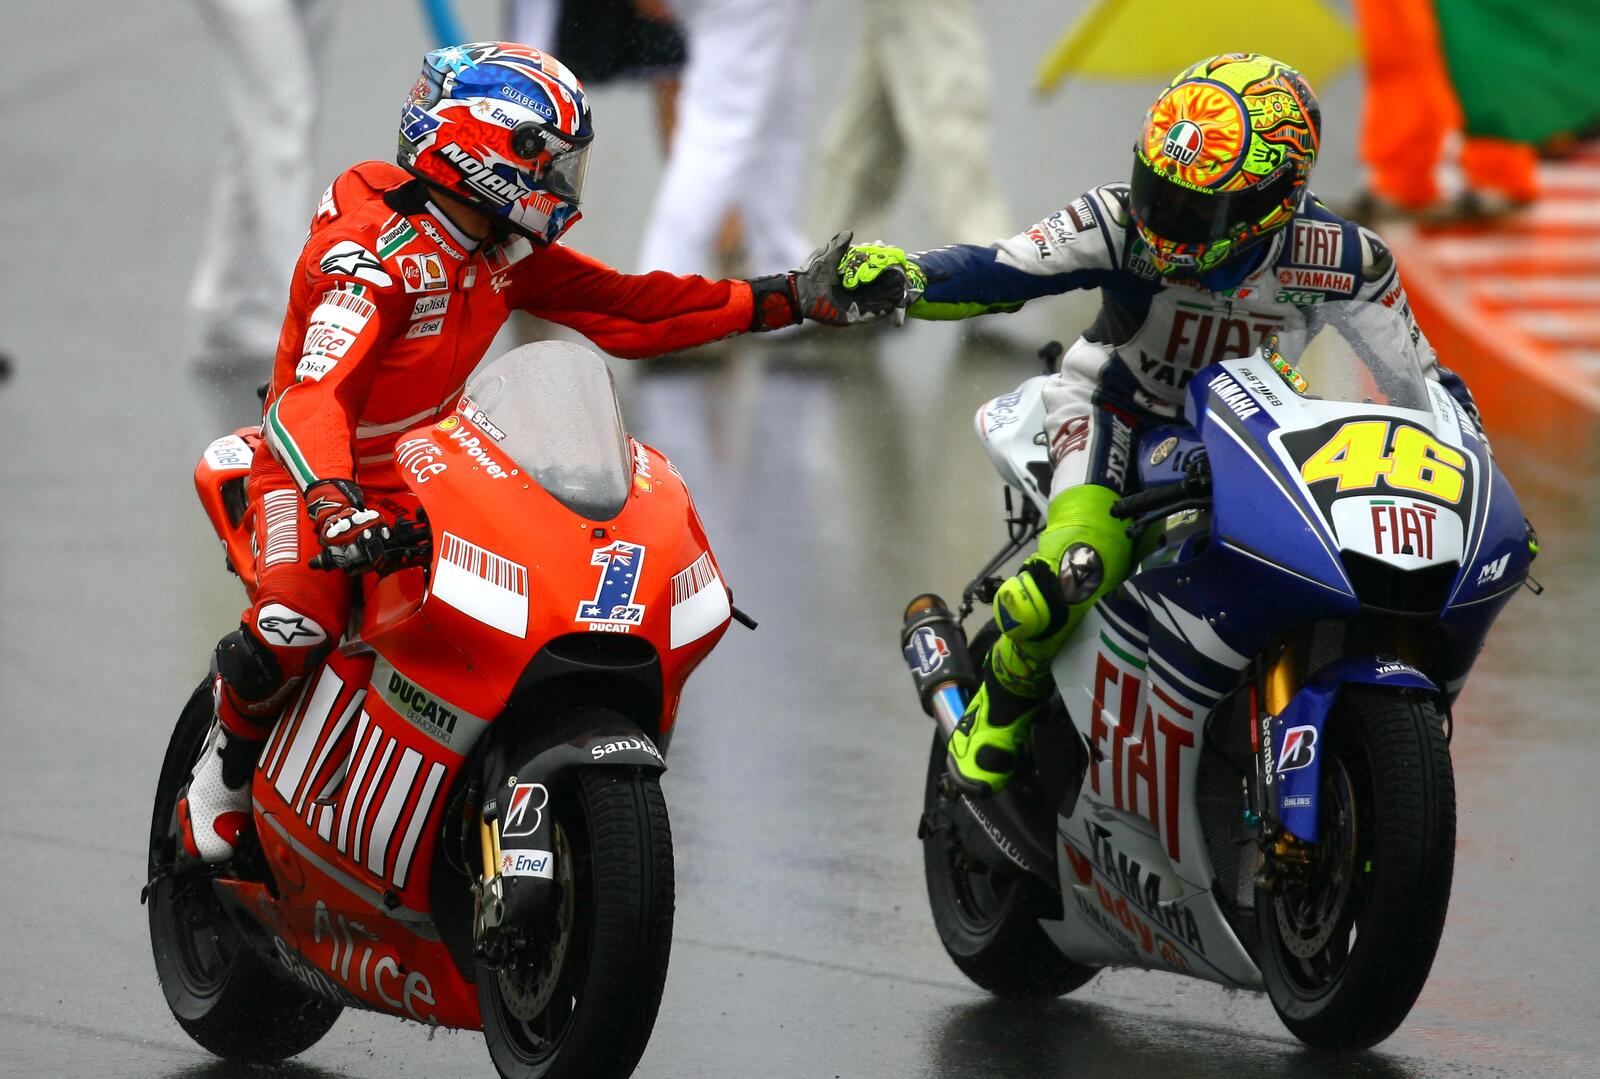 Free photo Ducati and Yamaha at motorcycle races